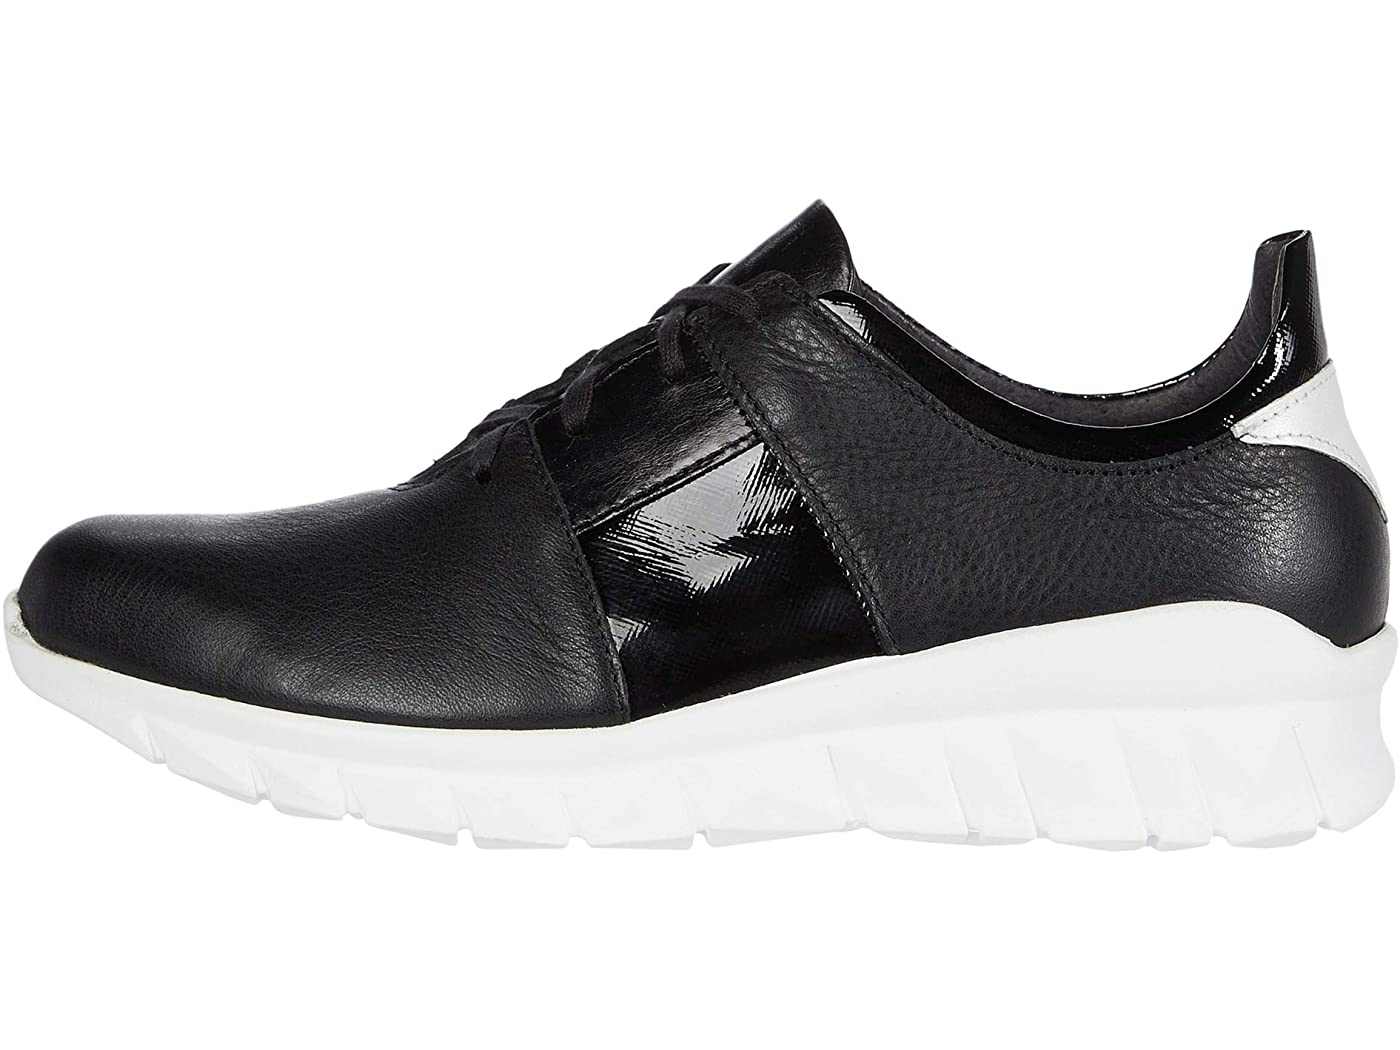 Buzz | Leather | Black/White - Shoe - Naot